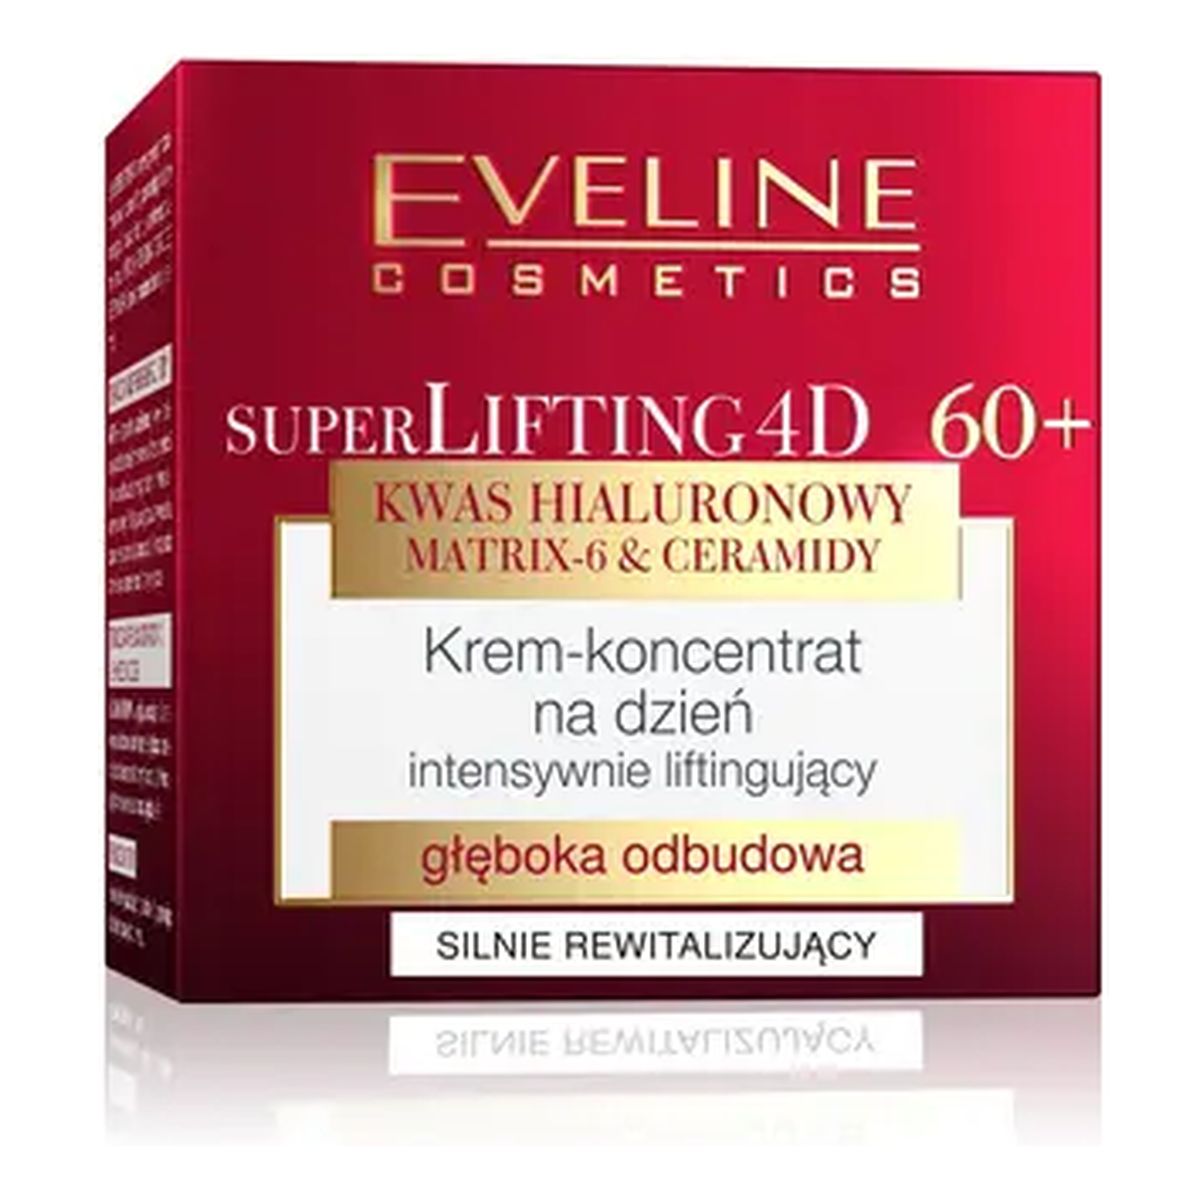 Eveline Super Lifting 4D Krem - koncentrat na dzień 60+ 50ml